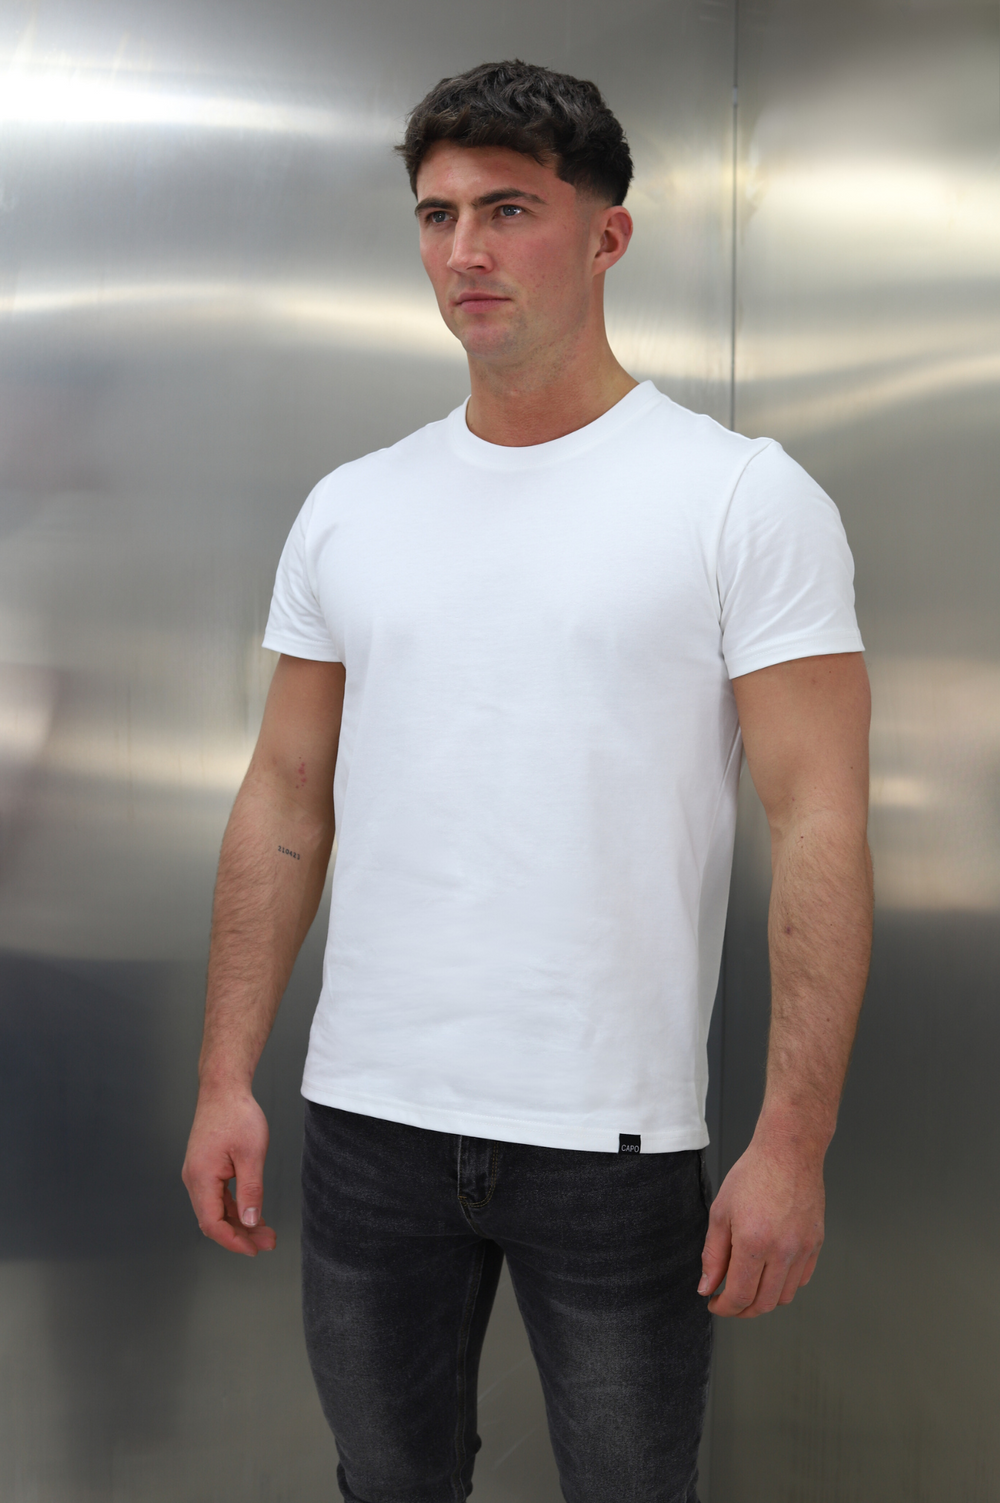 Capo HEAVYWEIGHT Cotton T-Shirt - White